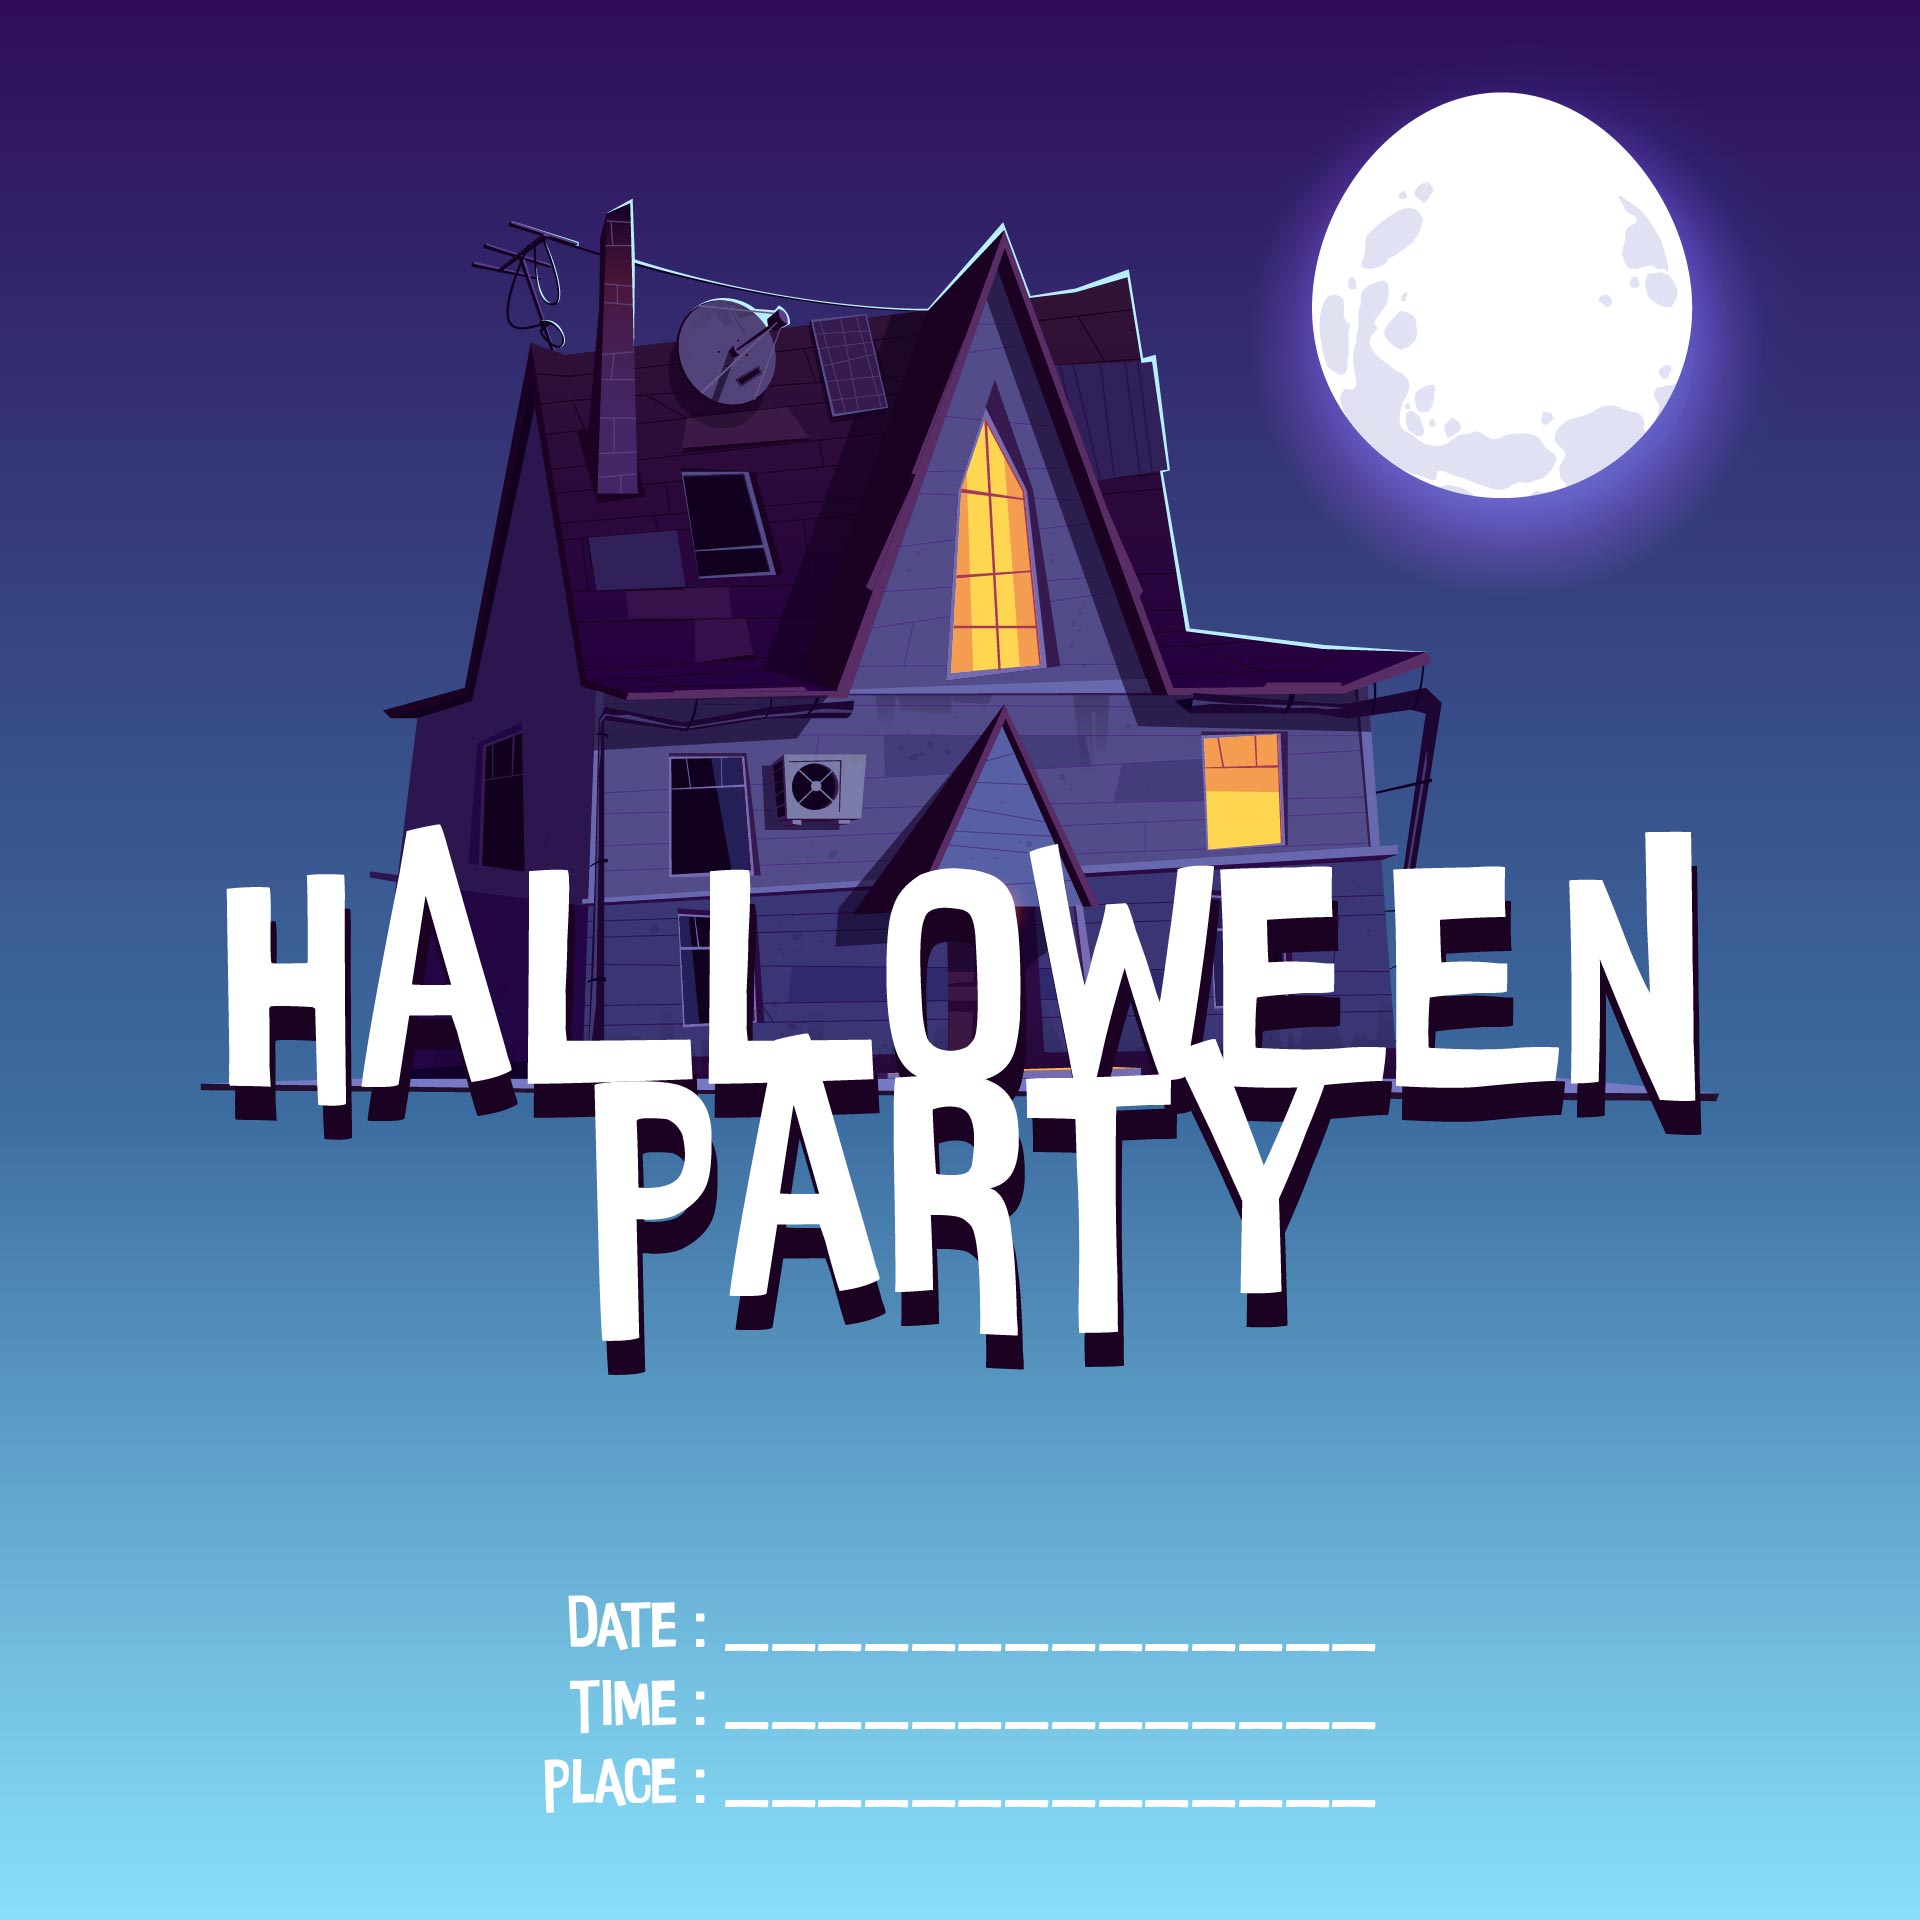 Green Haze Haunted House Halloween Party Invitations